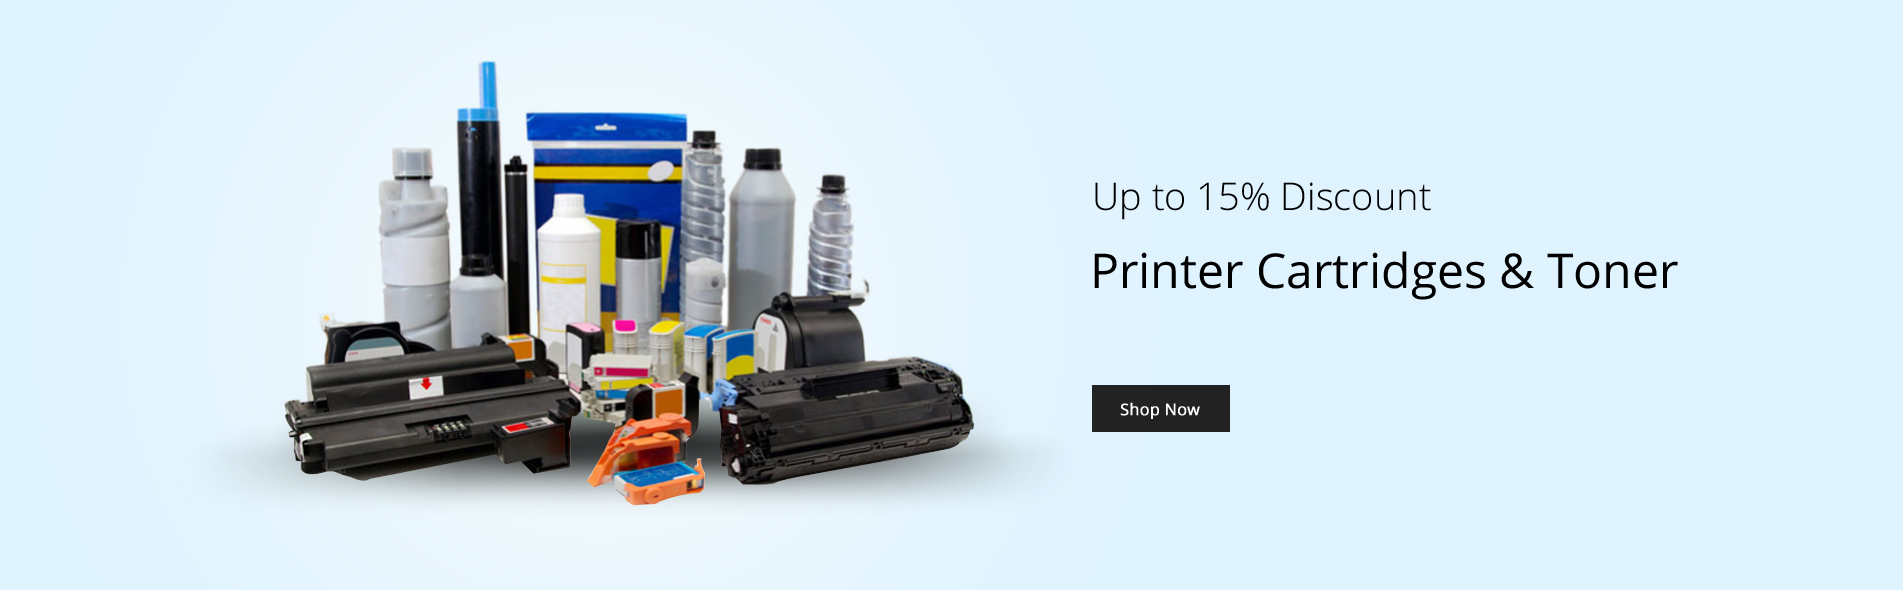 Printer cartridges & Toner